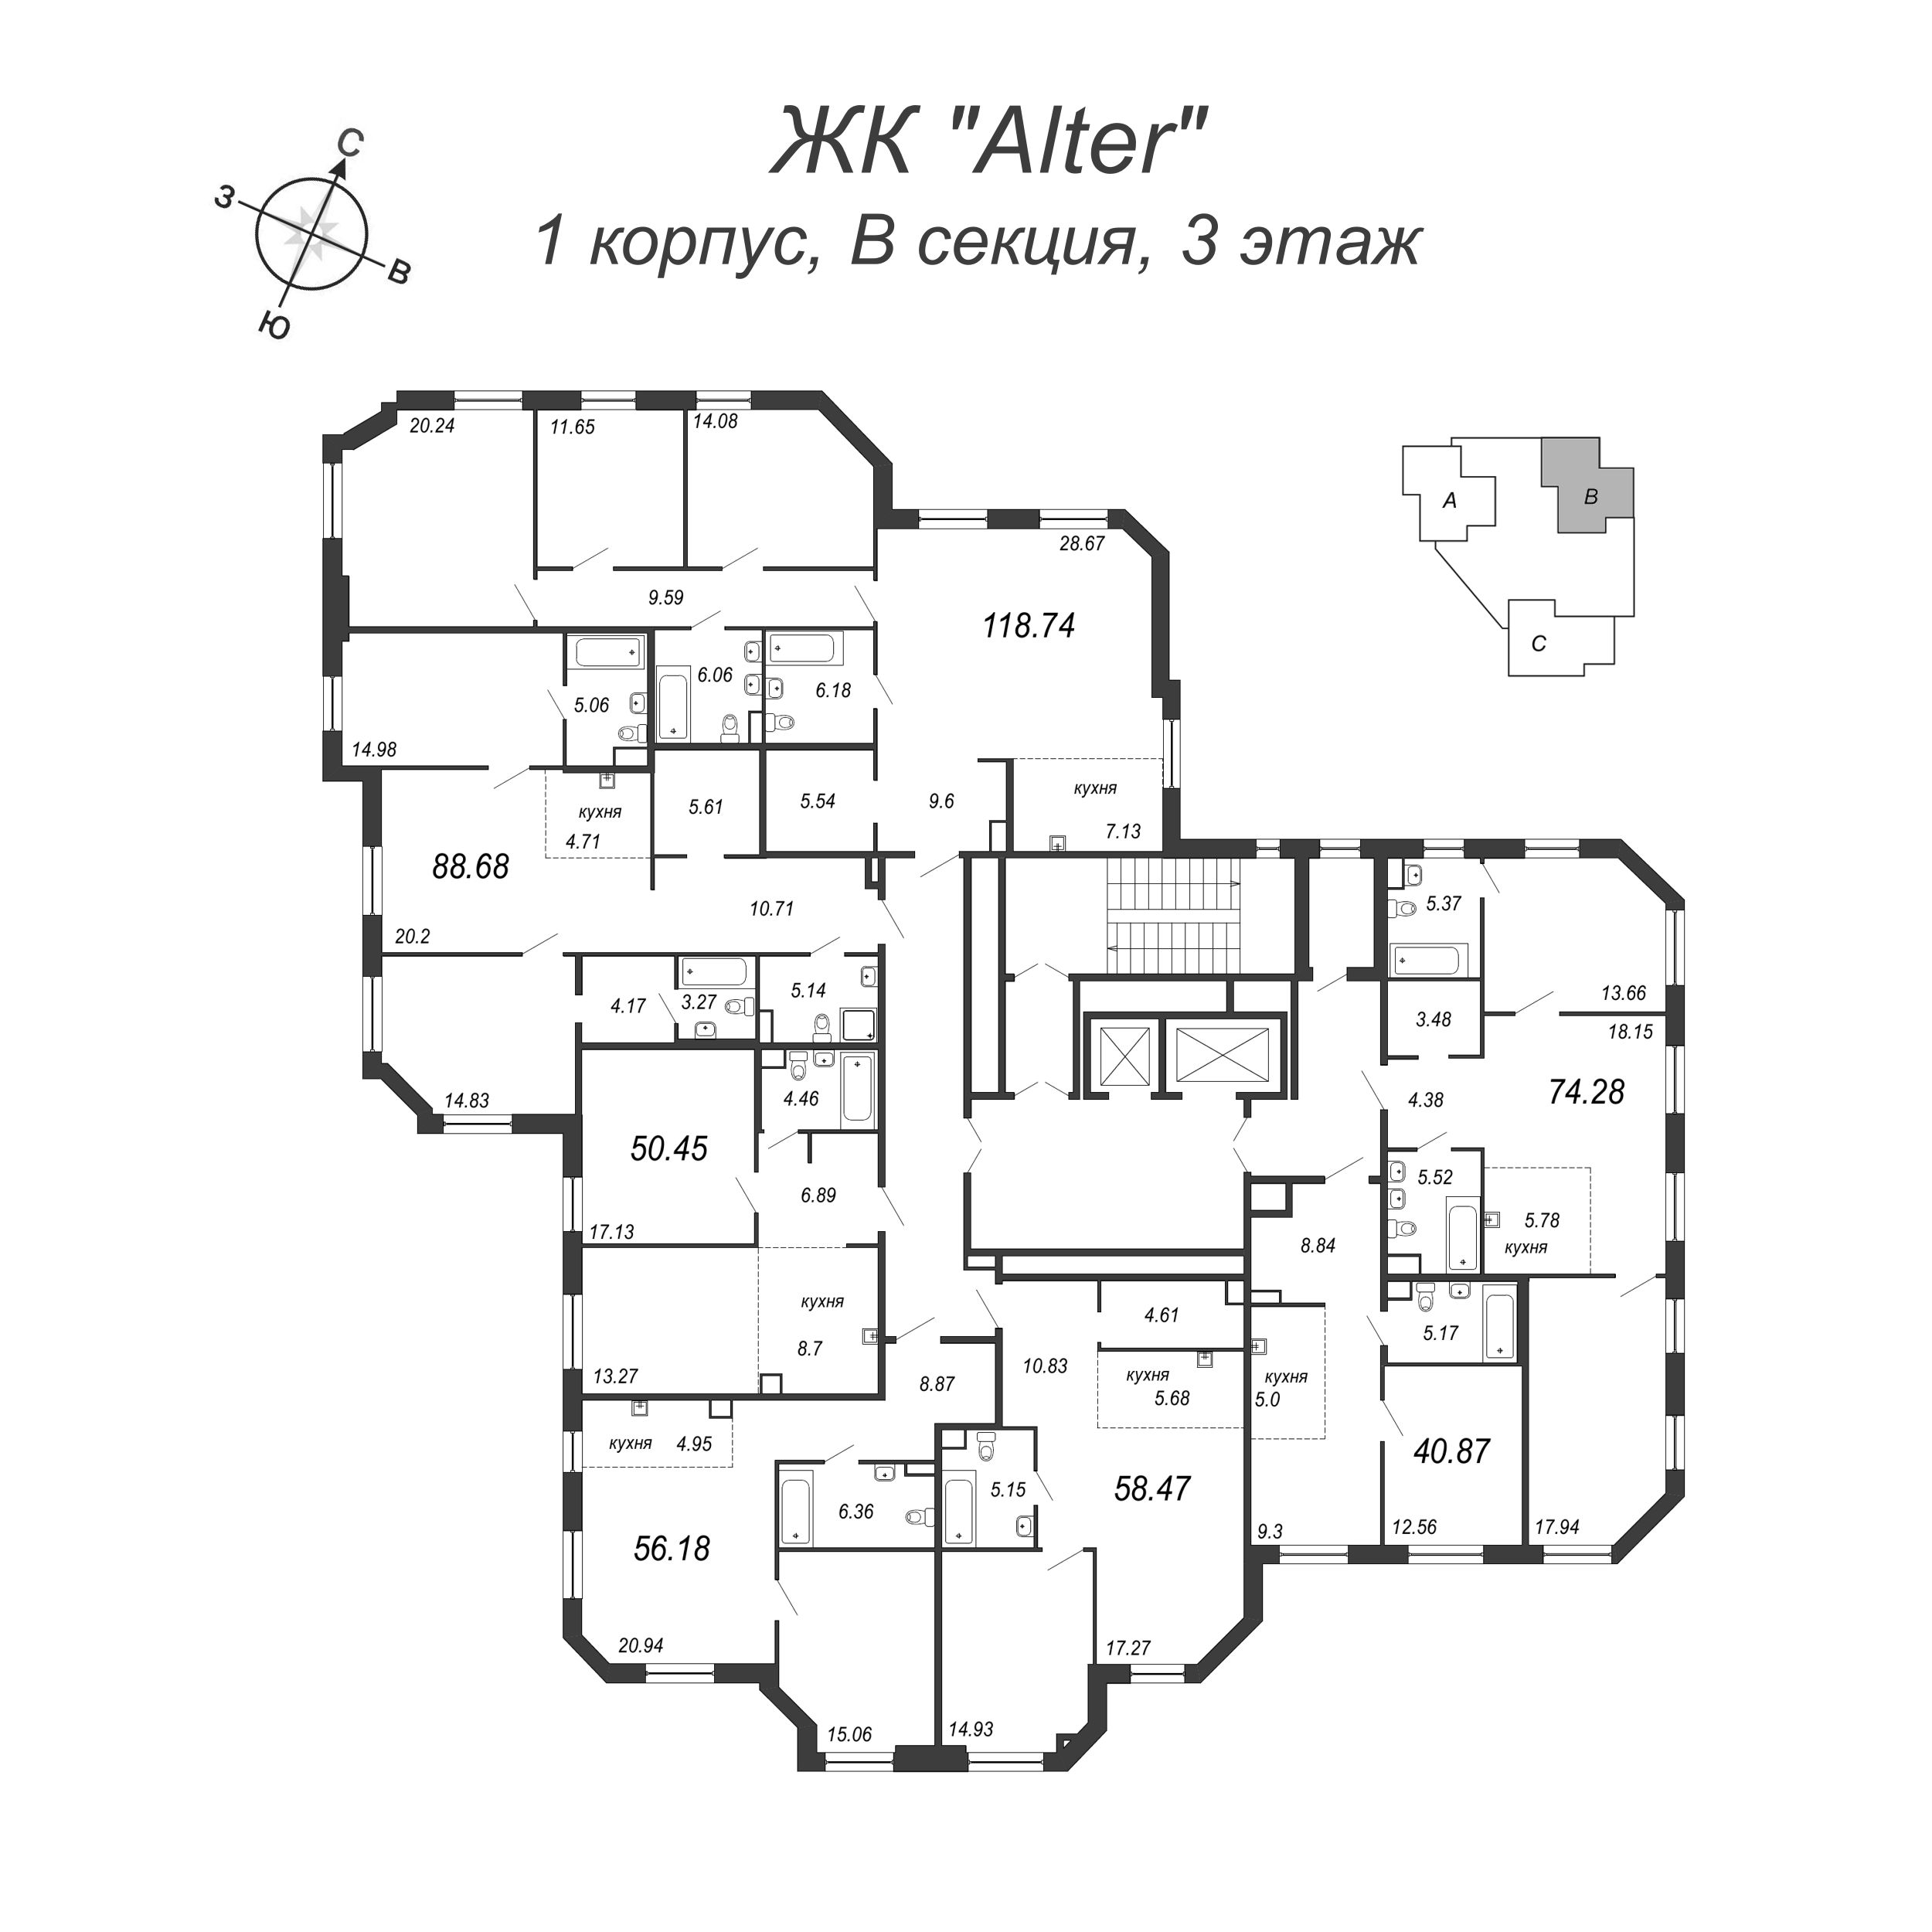 4-комнатная (Евро) квартира, 118.74 м² - планировка этажа